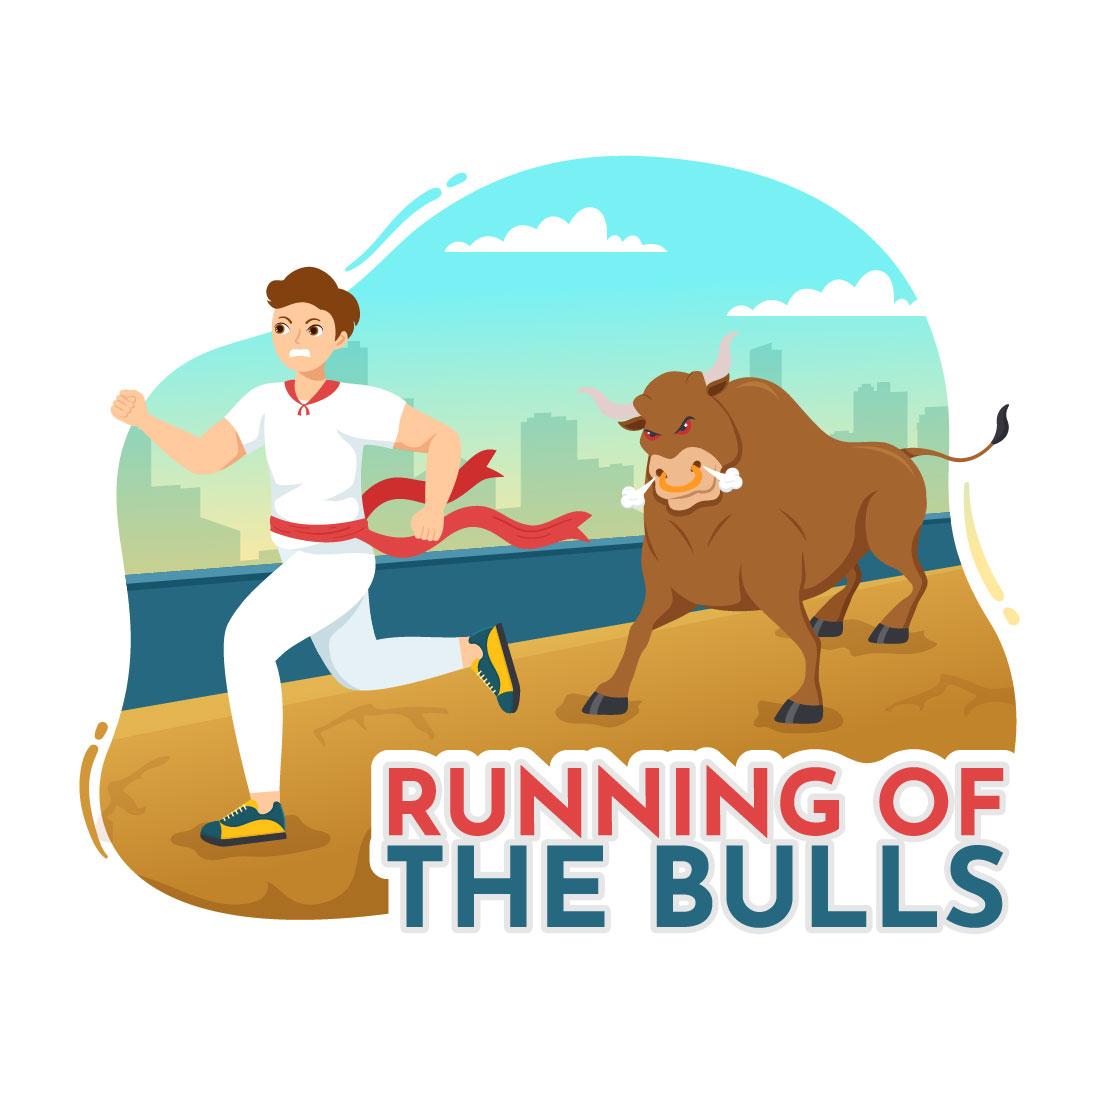 10 Running of the Bulls Illustration cover image.